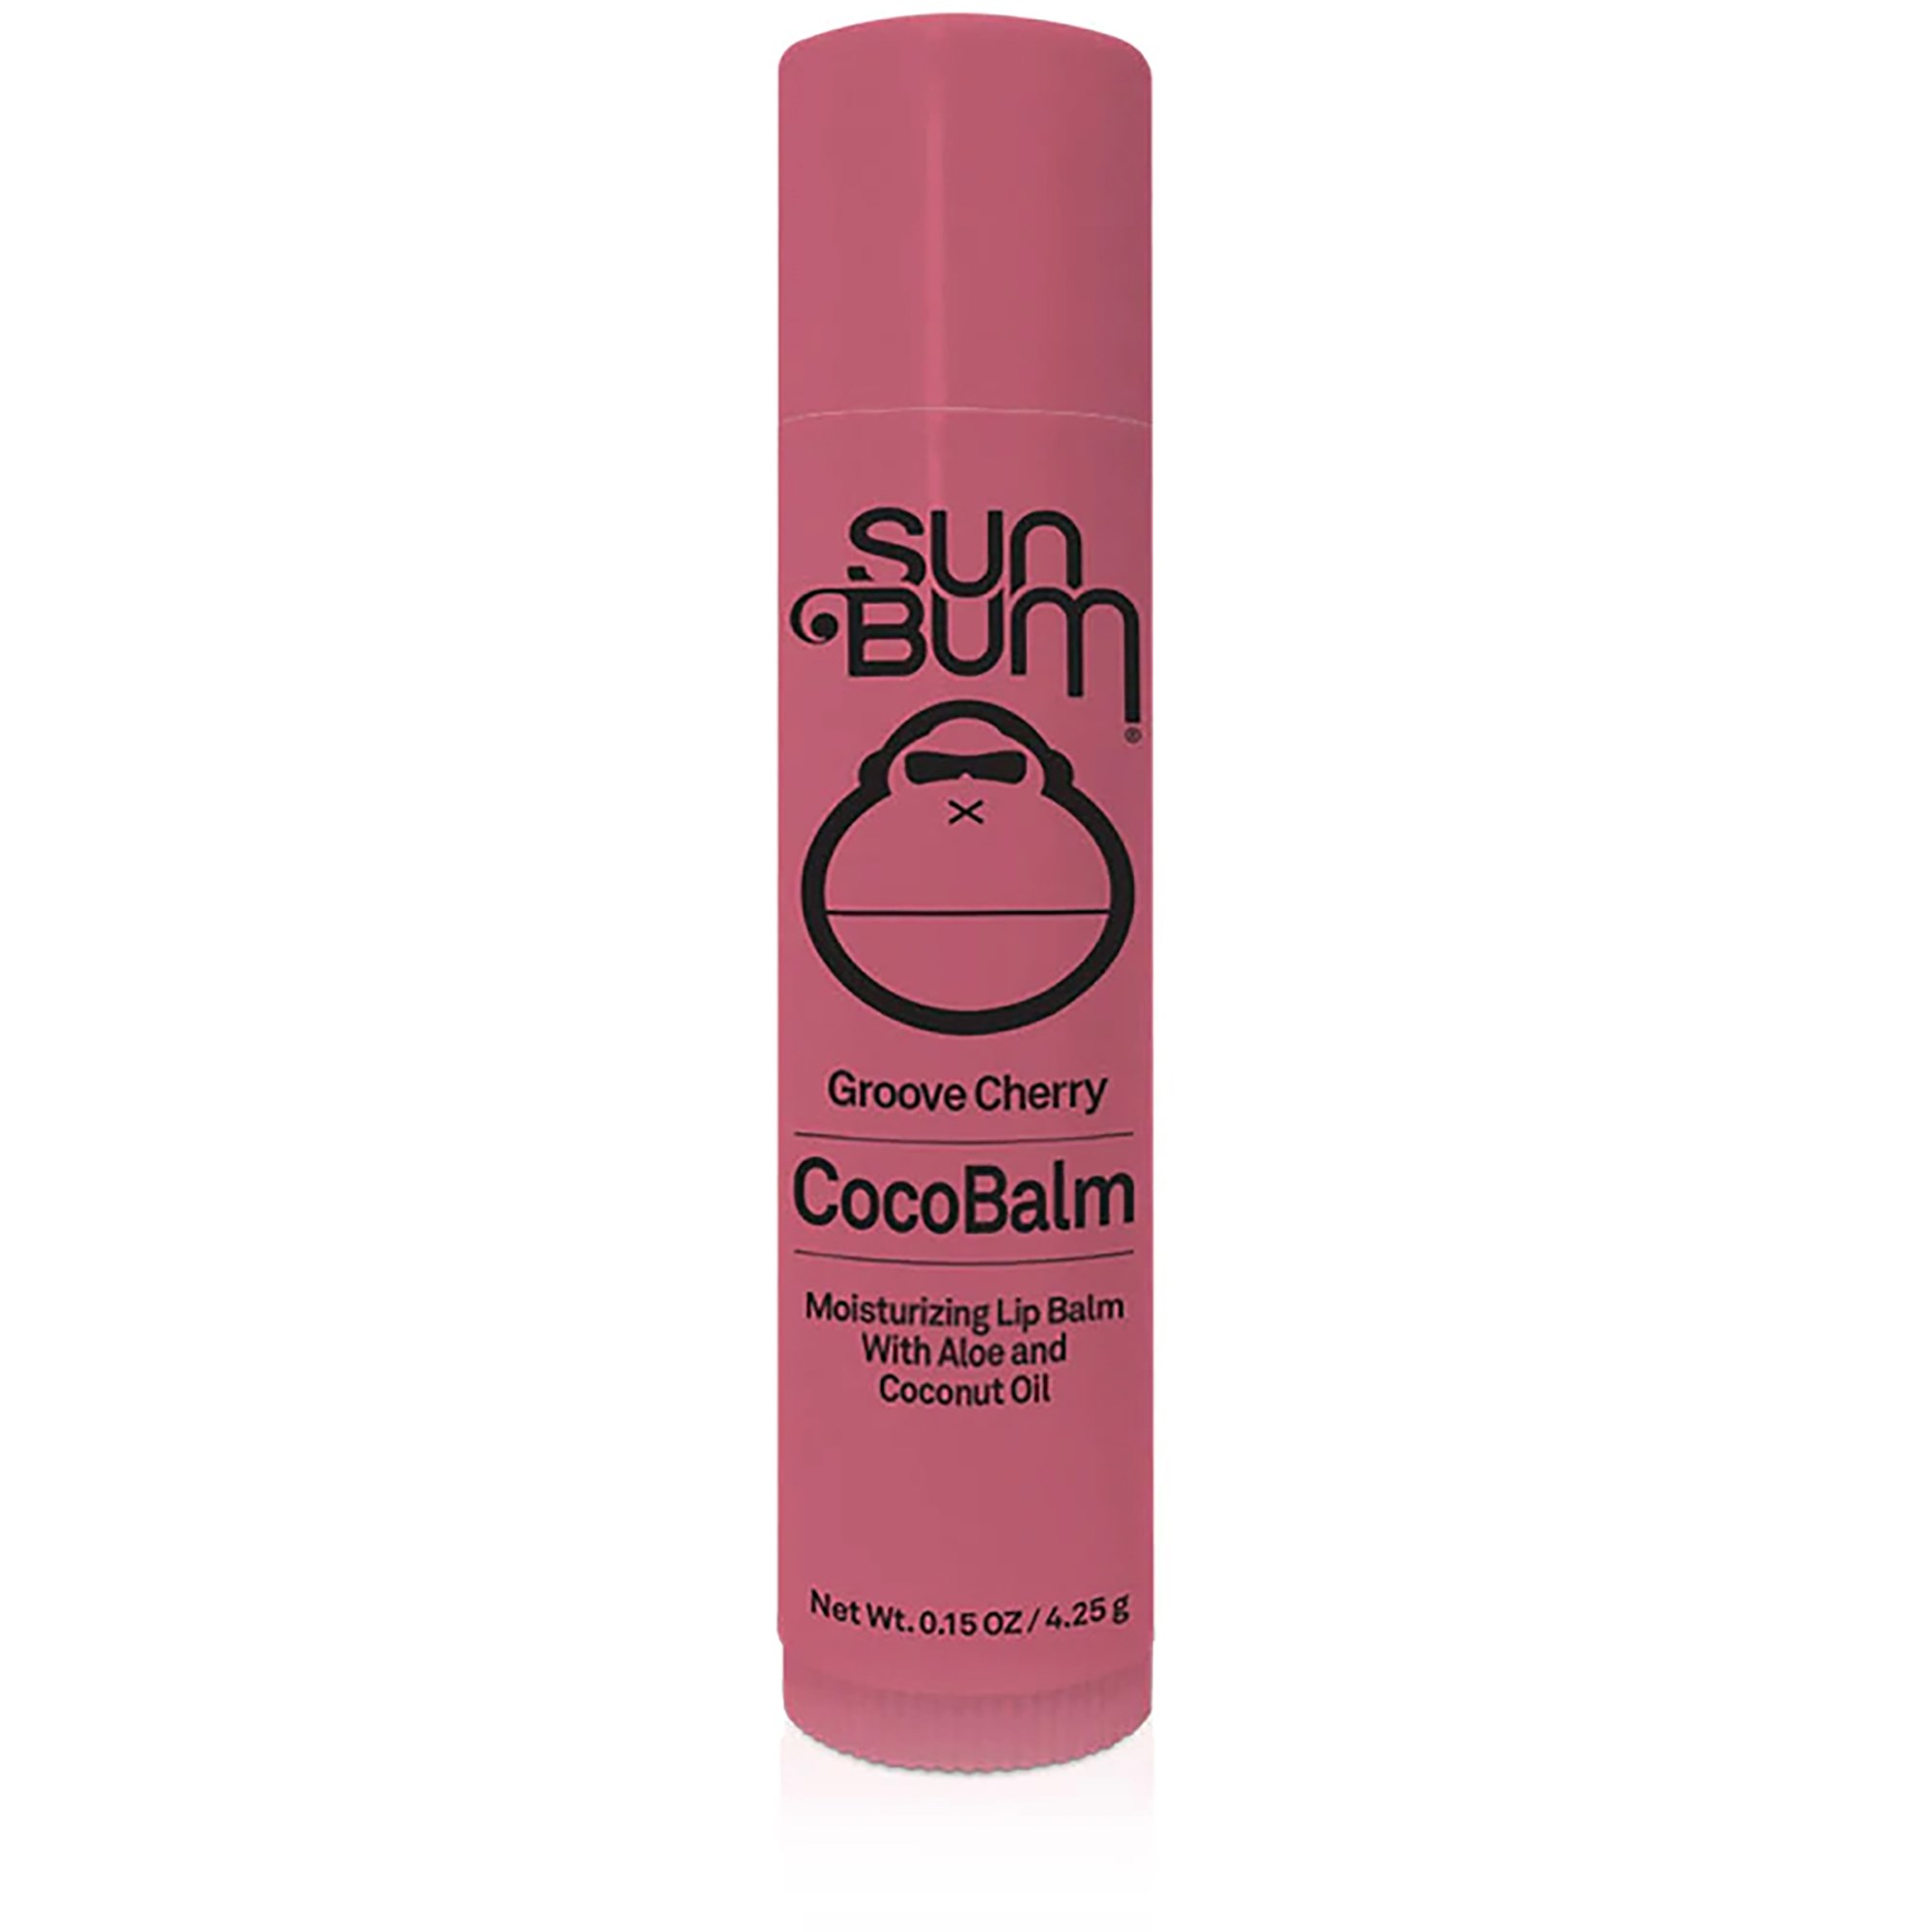 Sun Bum CocoBalm Moisturizing Lip Balm Groove Cherry